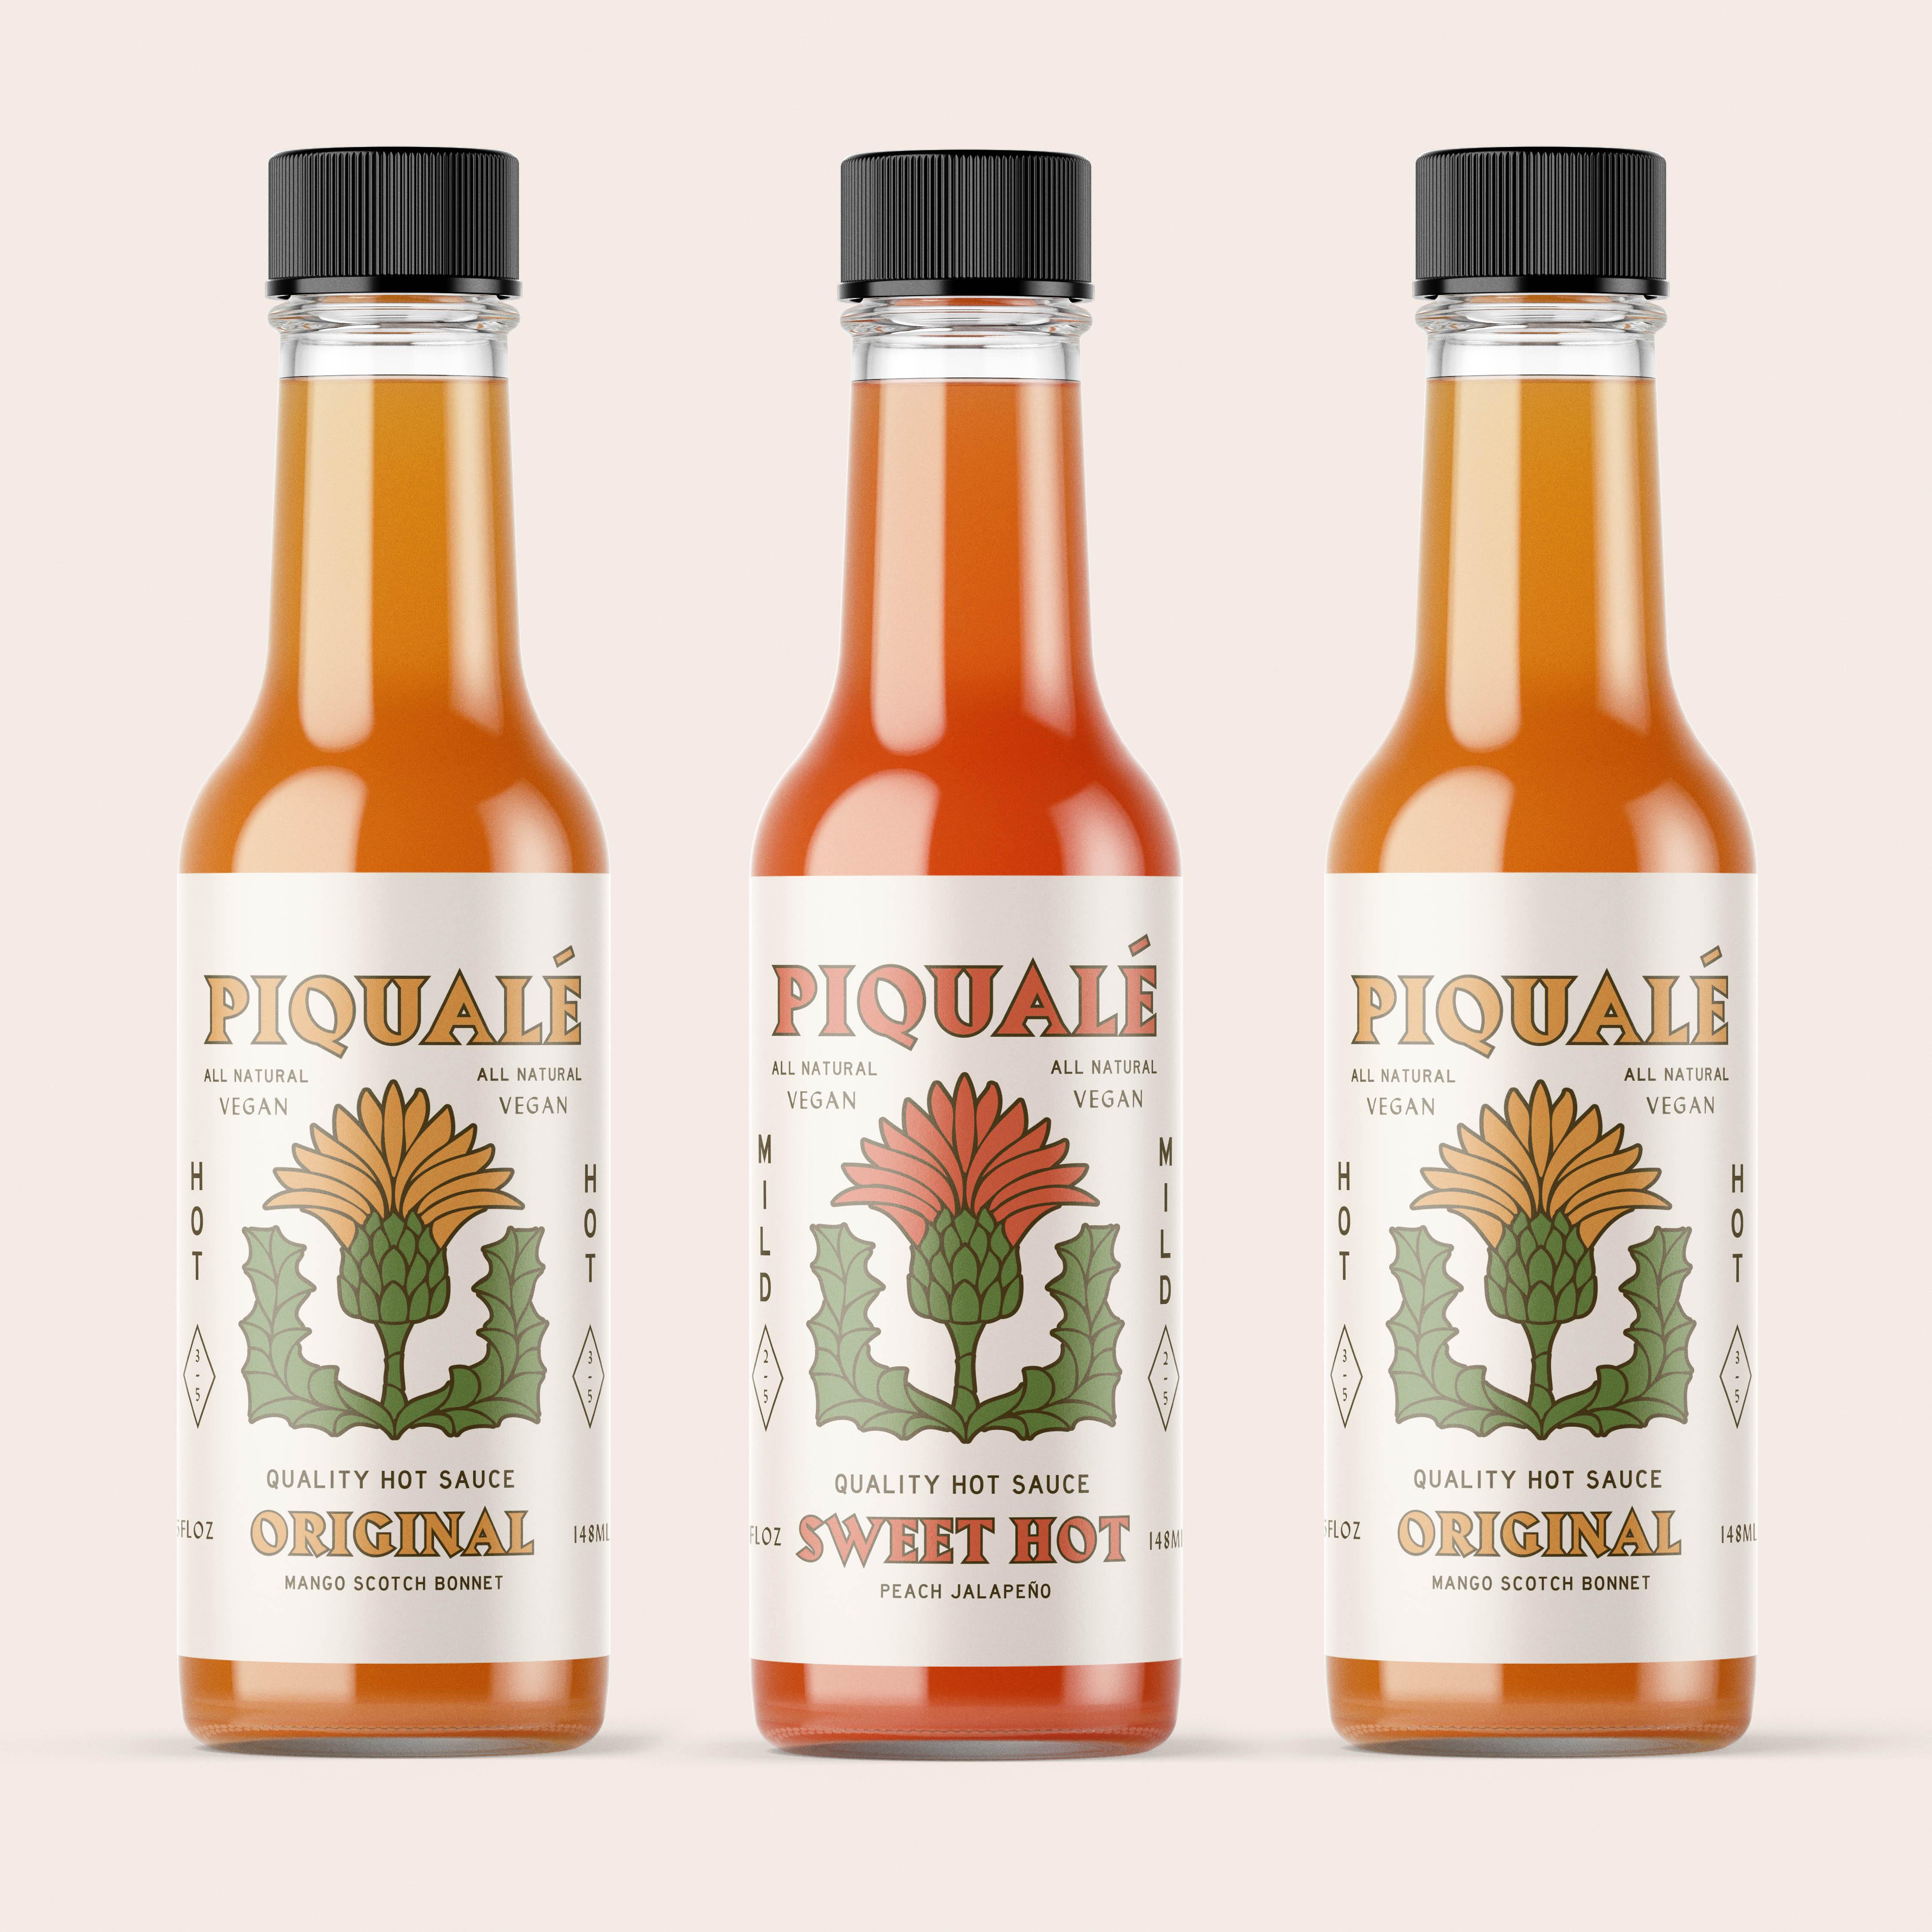 Piqualé Hot Sauce Branding by The Artful Union